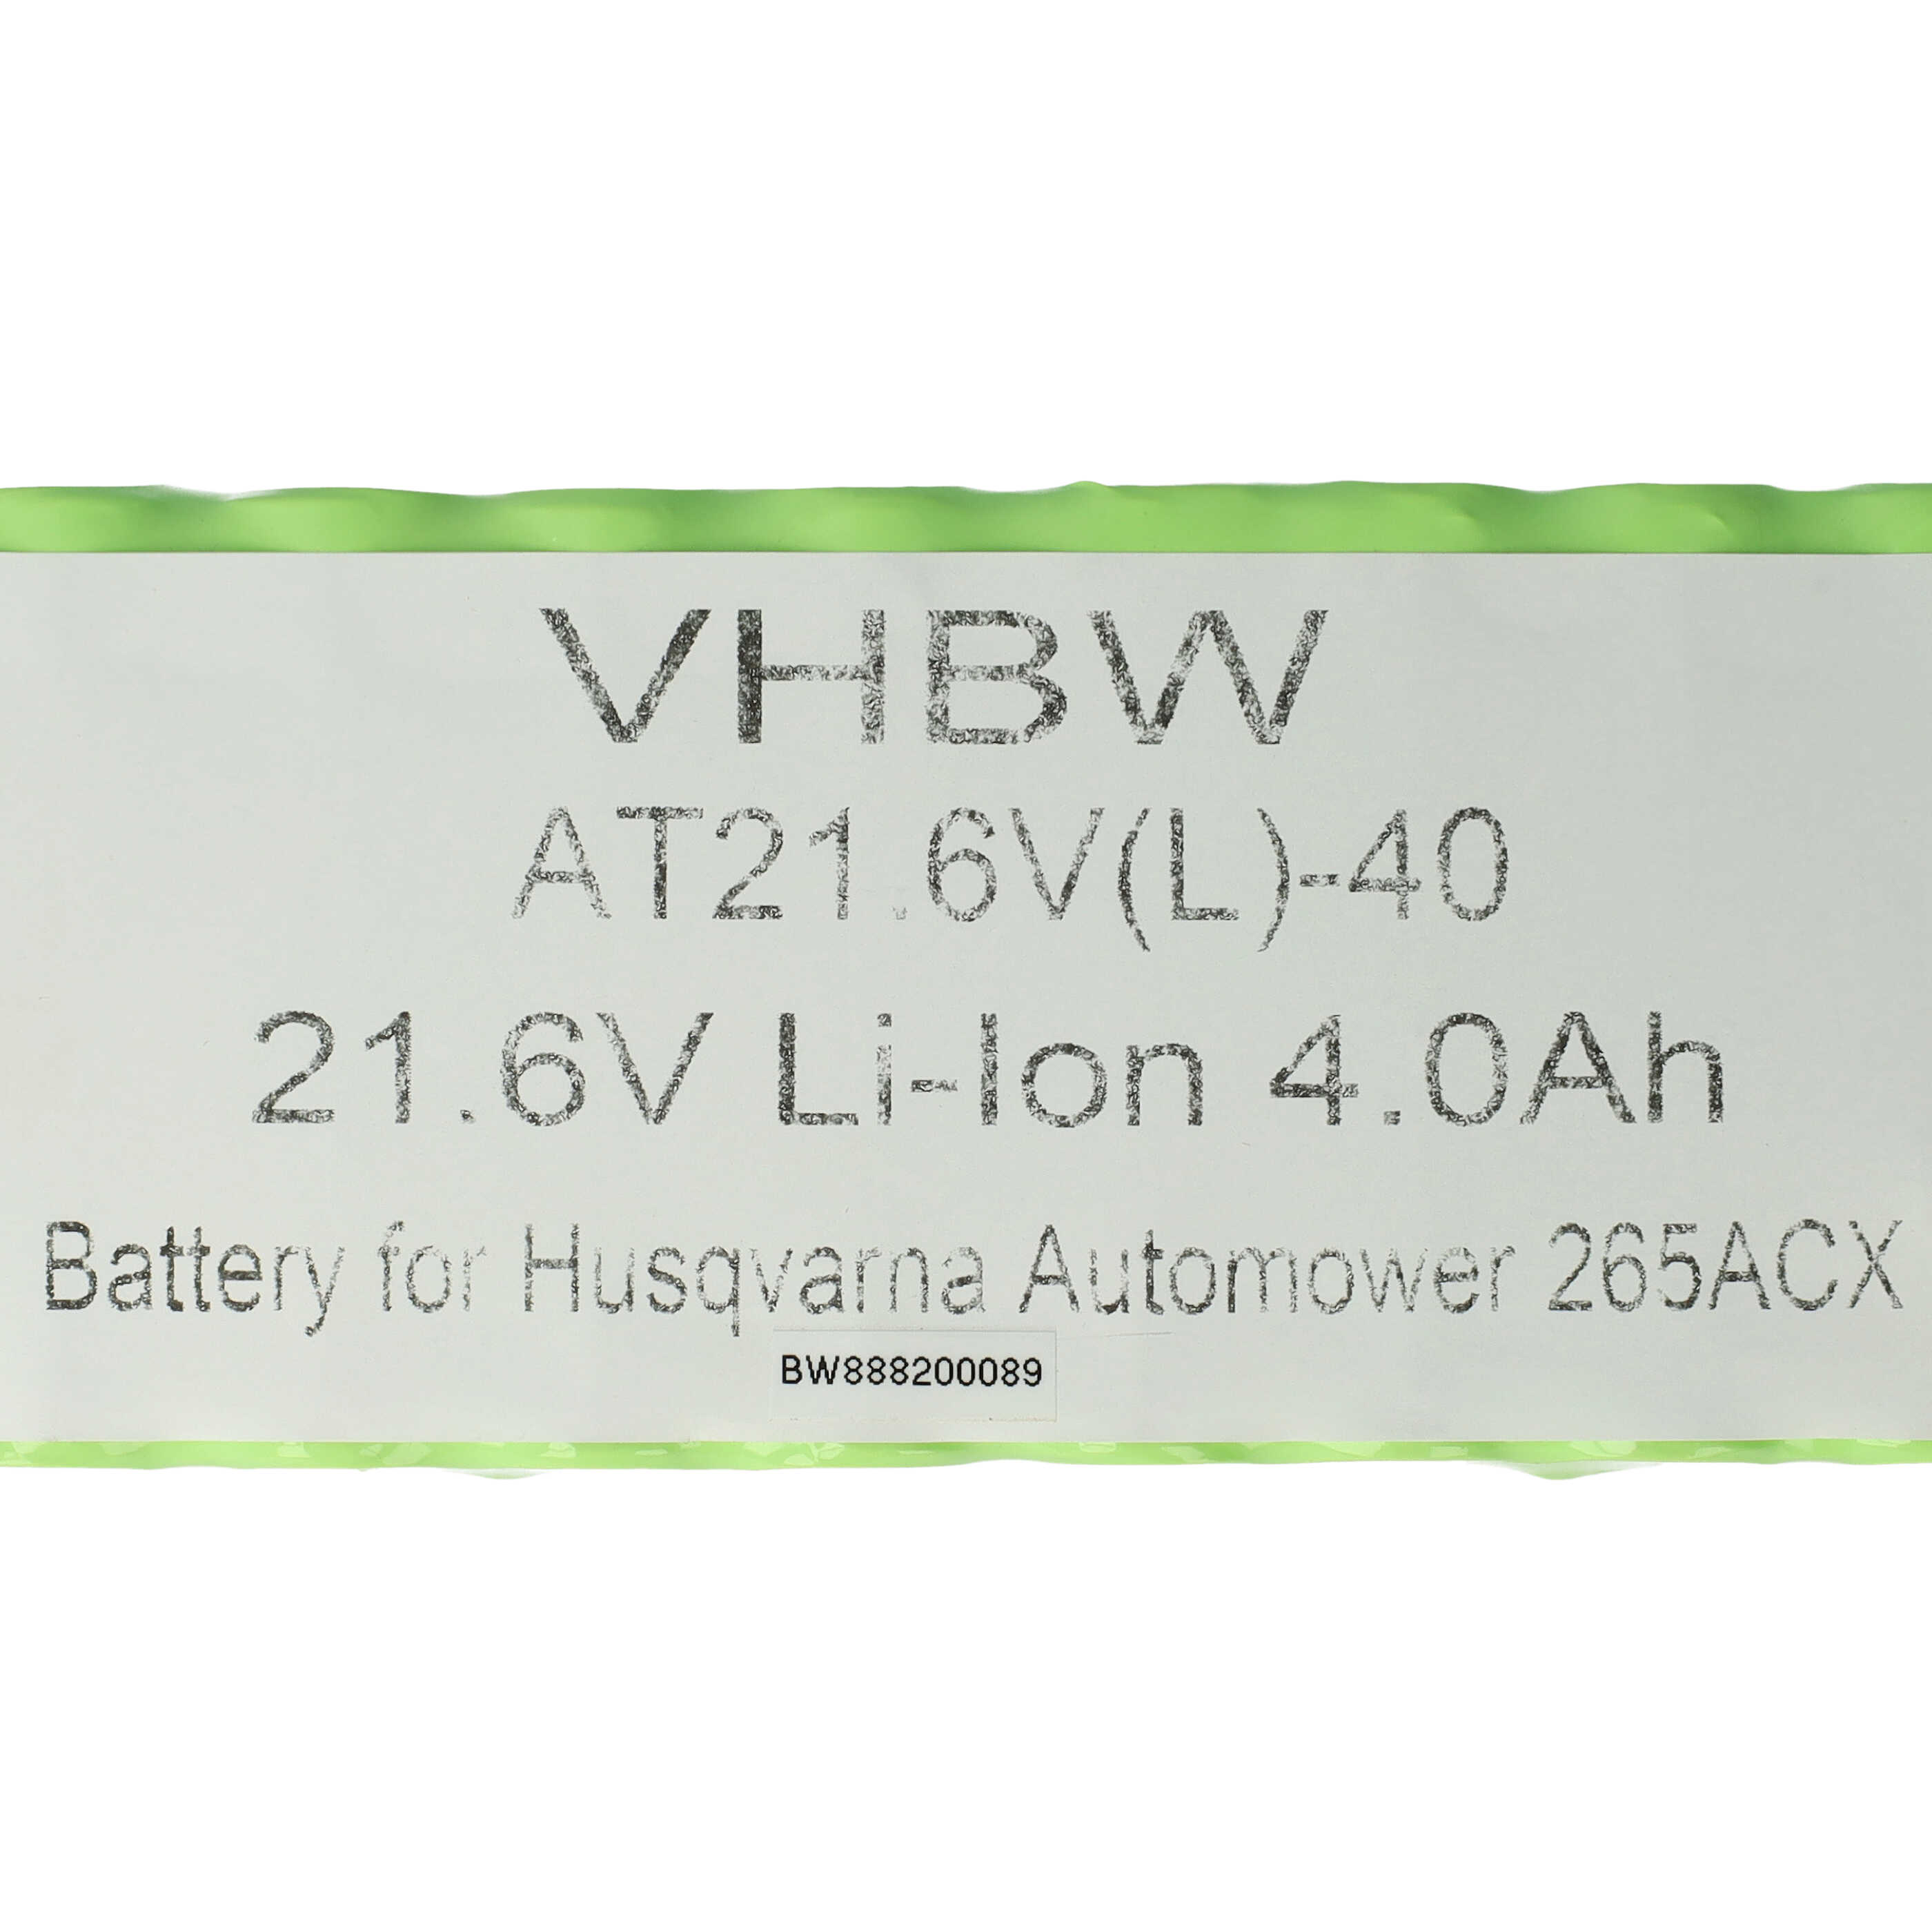 Lawnmower Battery Replacement for Husqvarna 578 84 87-03, 578 84 87-01, 578 84 87-02 - 4000mAh 21.6V Li-Ion